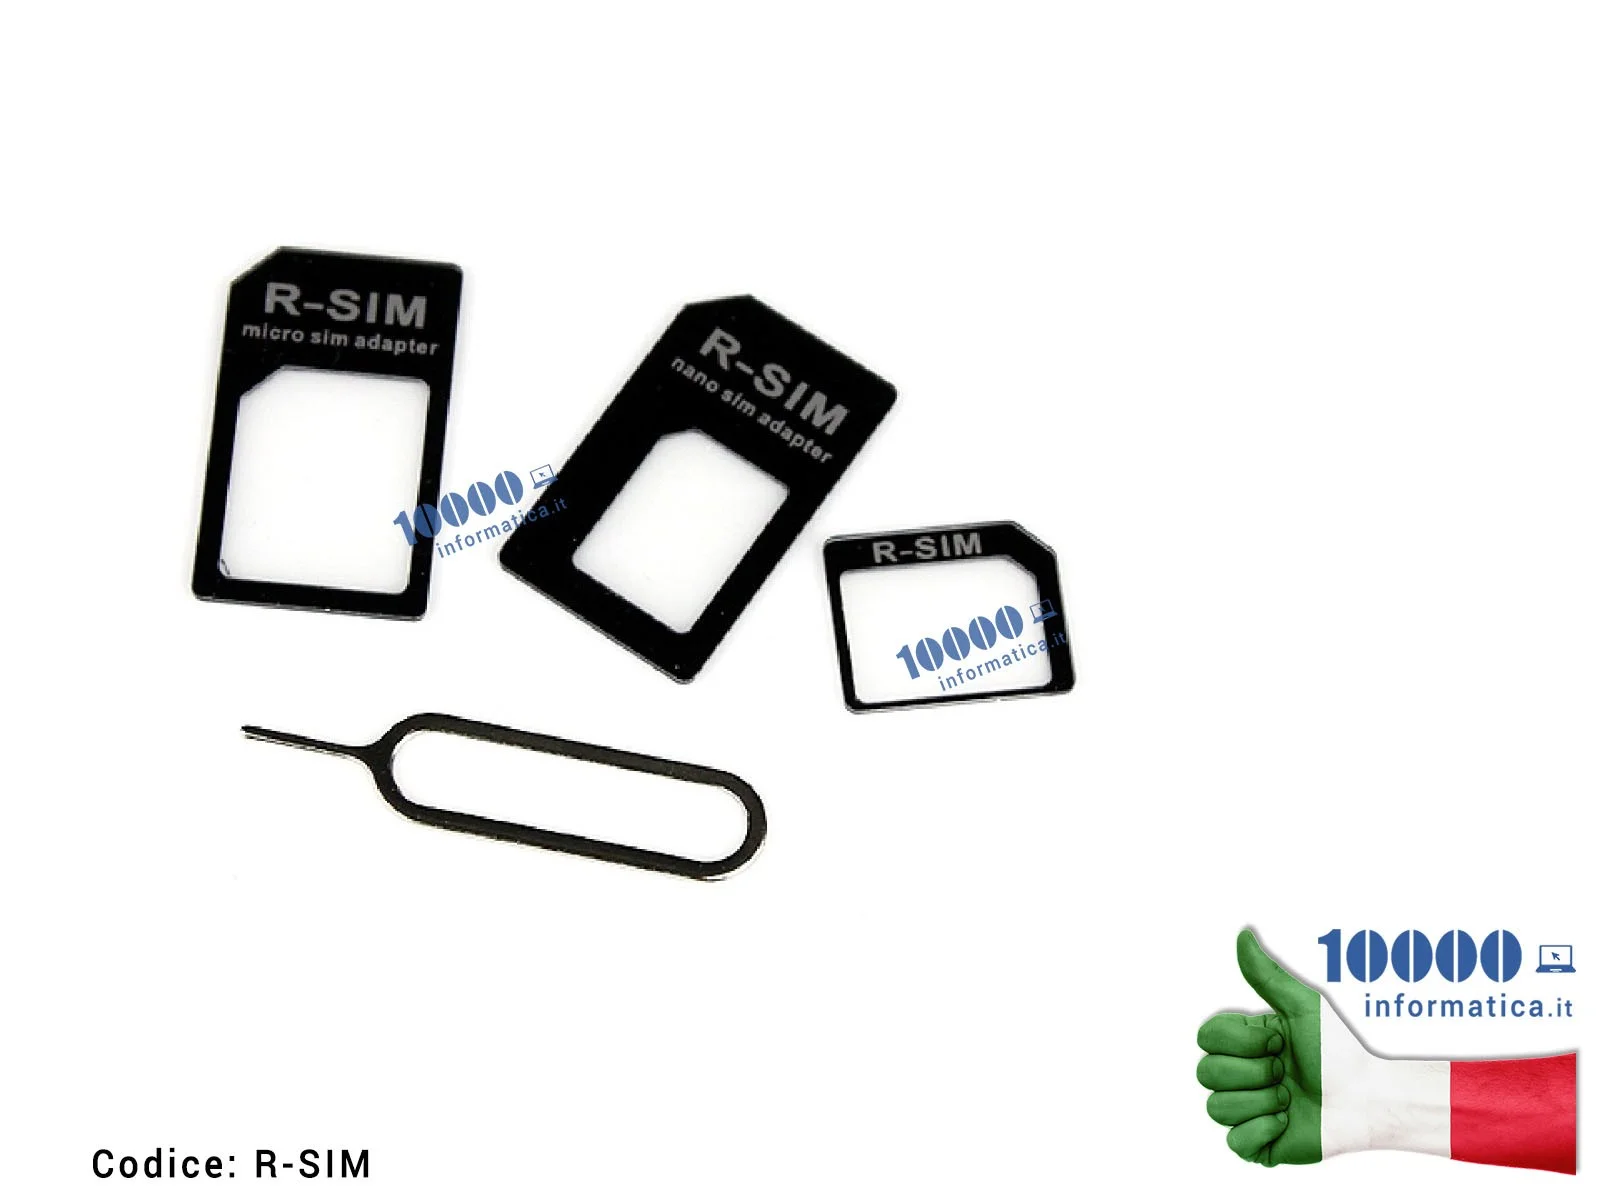 R-SIM Adattatore Sim NANO MICRO-SIM per iPhone 4 4S 5 6 6+ 6S 6S+ 7 7+ Samsung S3 S4 S5 S6